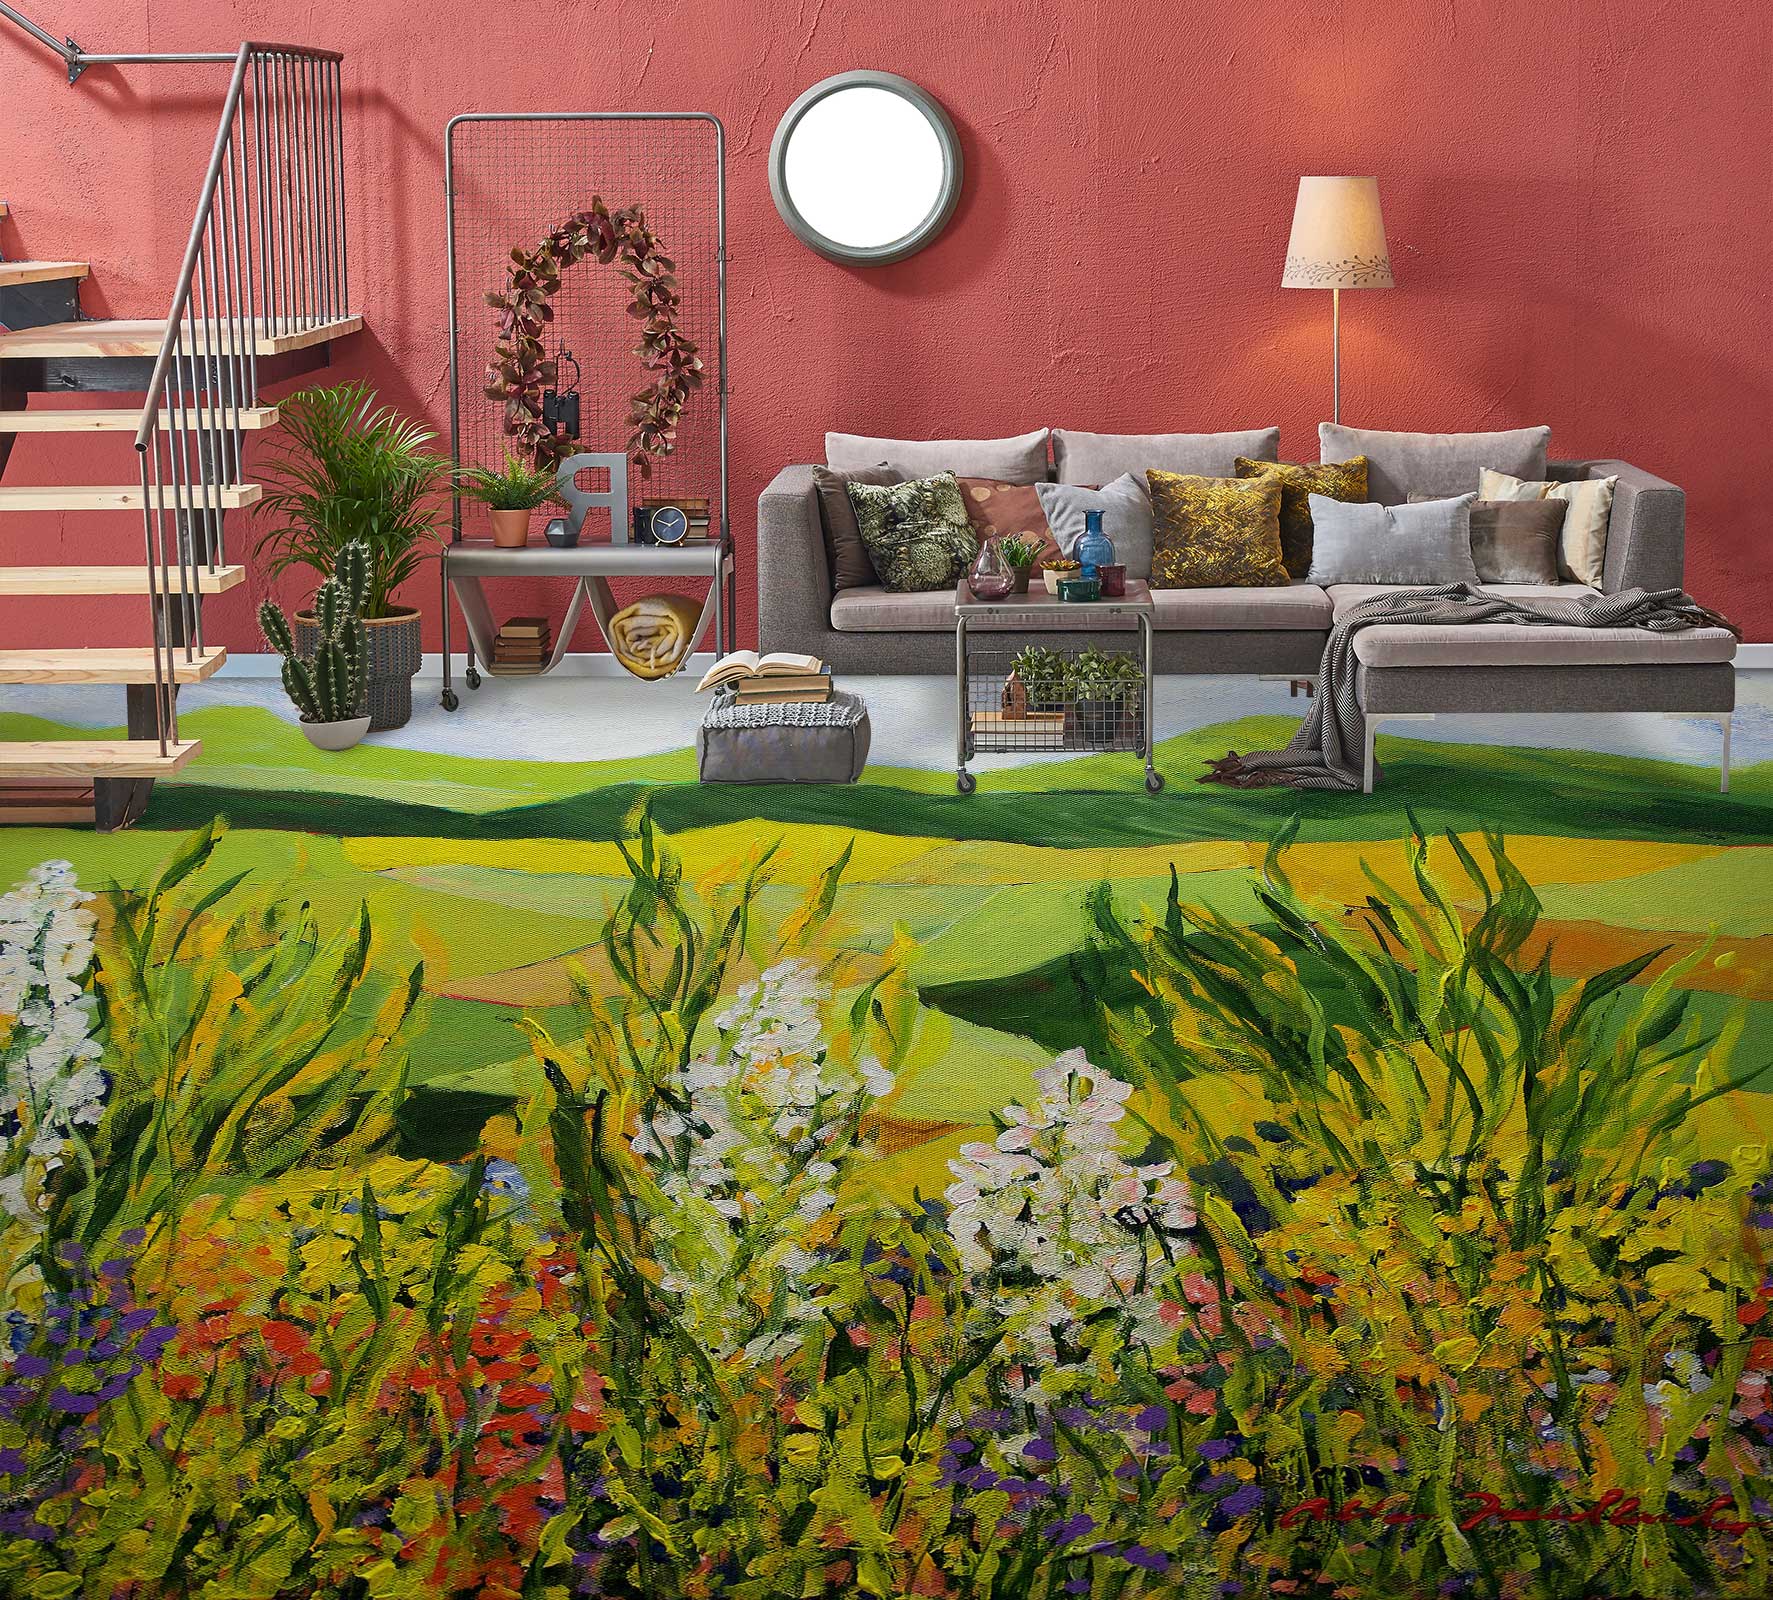 3D Flower Bush Hillside Lawn 9662 Allan P. Friedlander Floor Mural  Wallpaper Murals Self-Adhesive Removable Print Epoxy